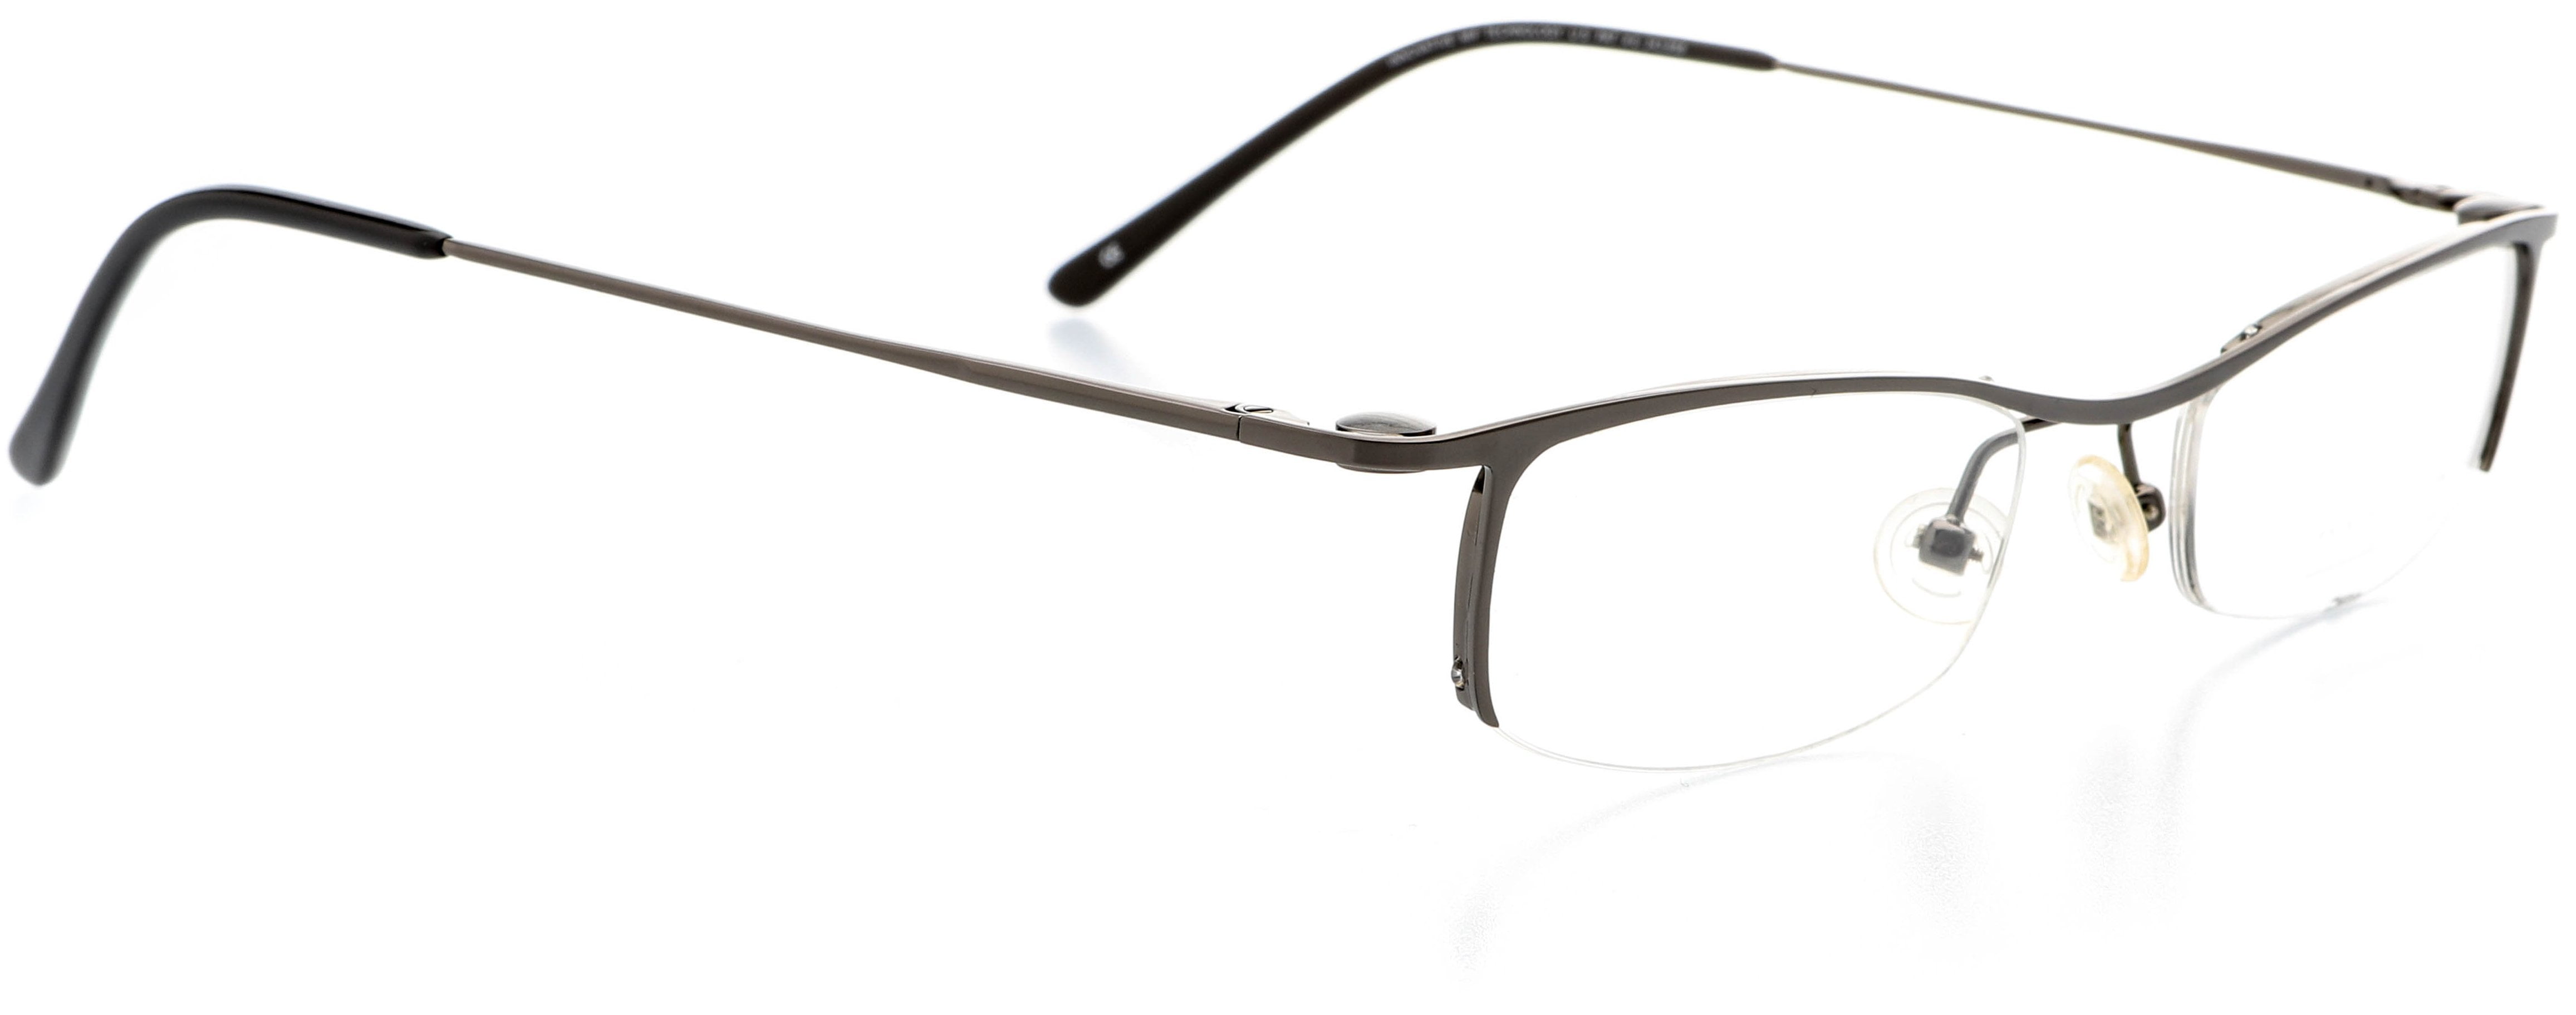 Flexon Autoflex 44 Eyeglasses 120 Natural Demo 55 16 140 